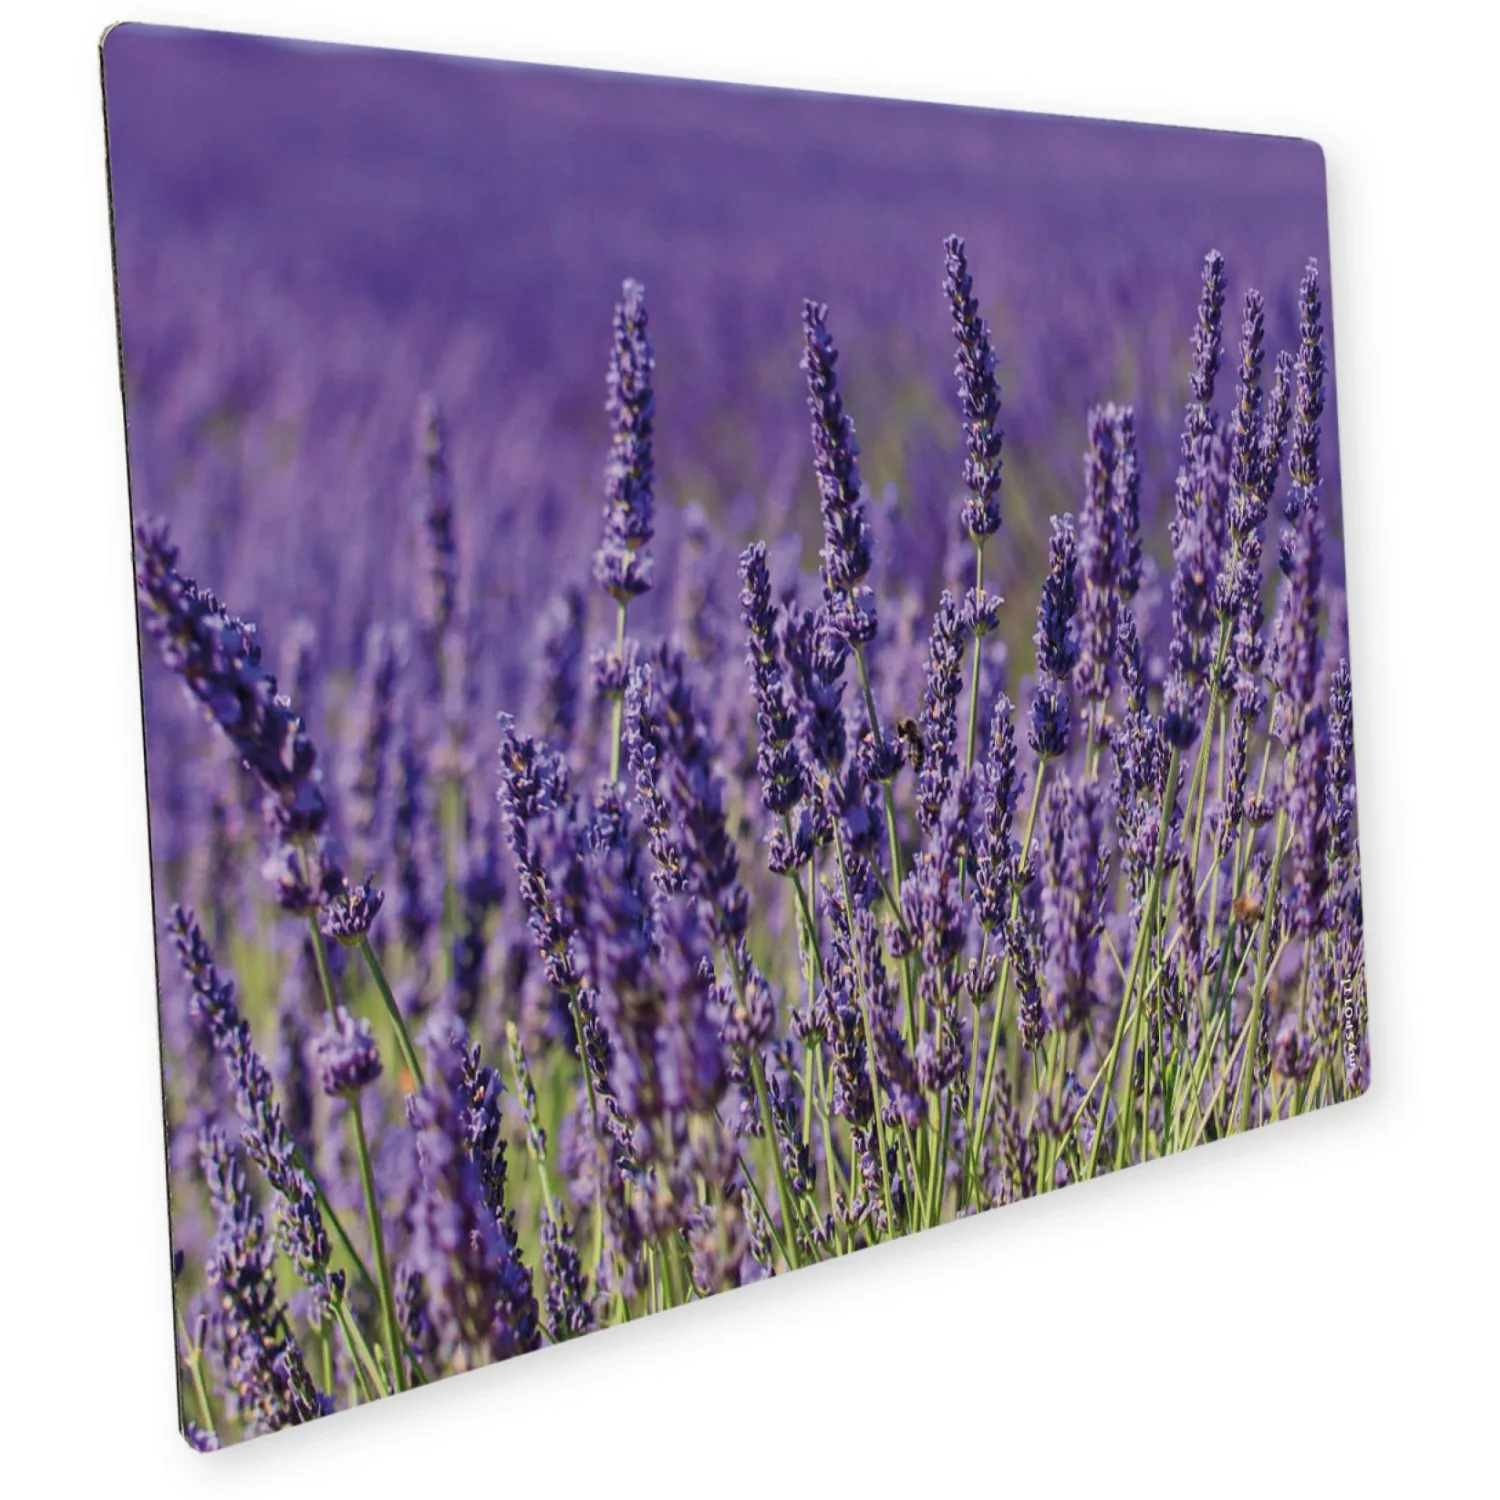 Myspotti Mini-Spritzschutzplatte Lavendel 59 cm x 41 cm günstig online kaufen